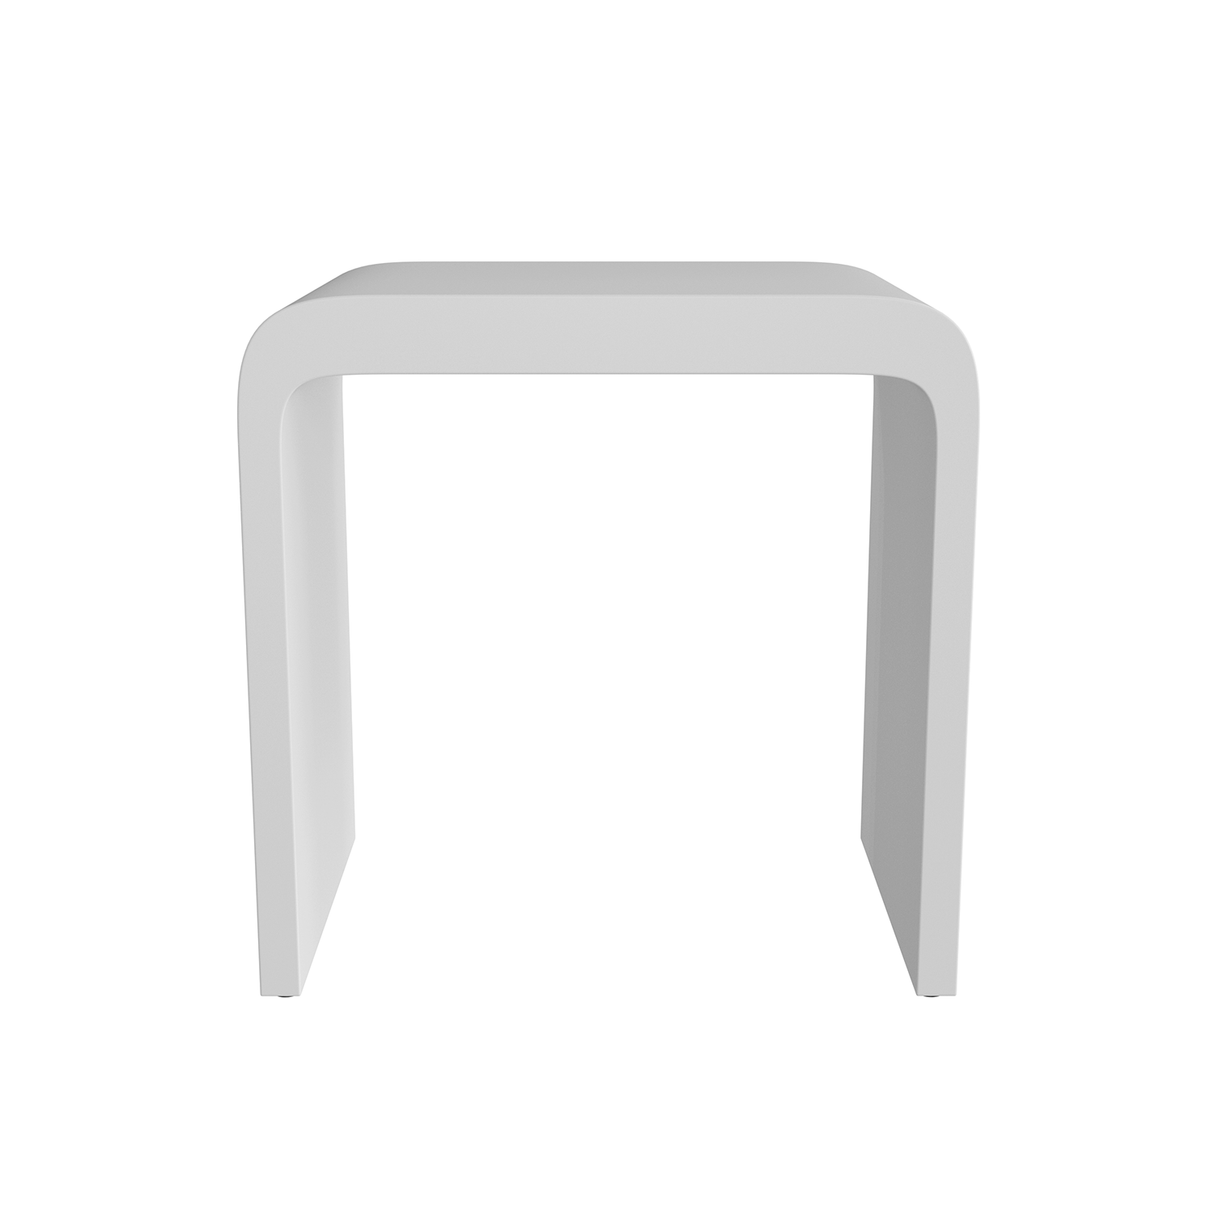 DAX Solid Surface Bathroom Stool - Matte White (DAX-ST-04) DAX-ST-04